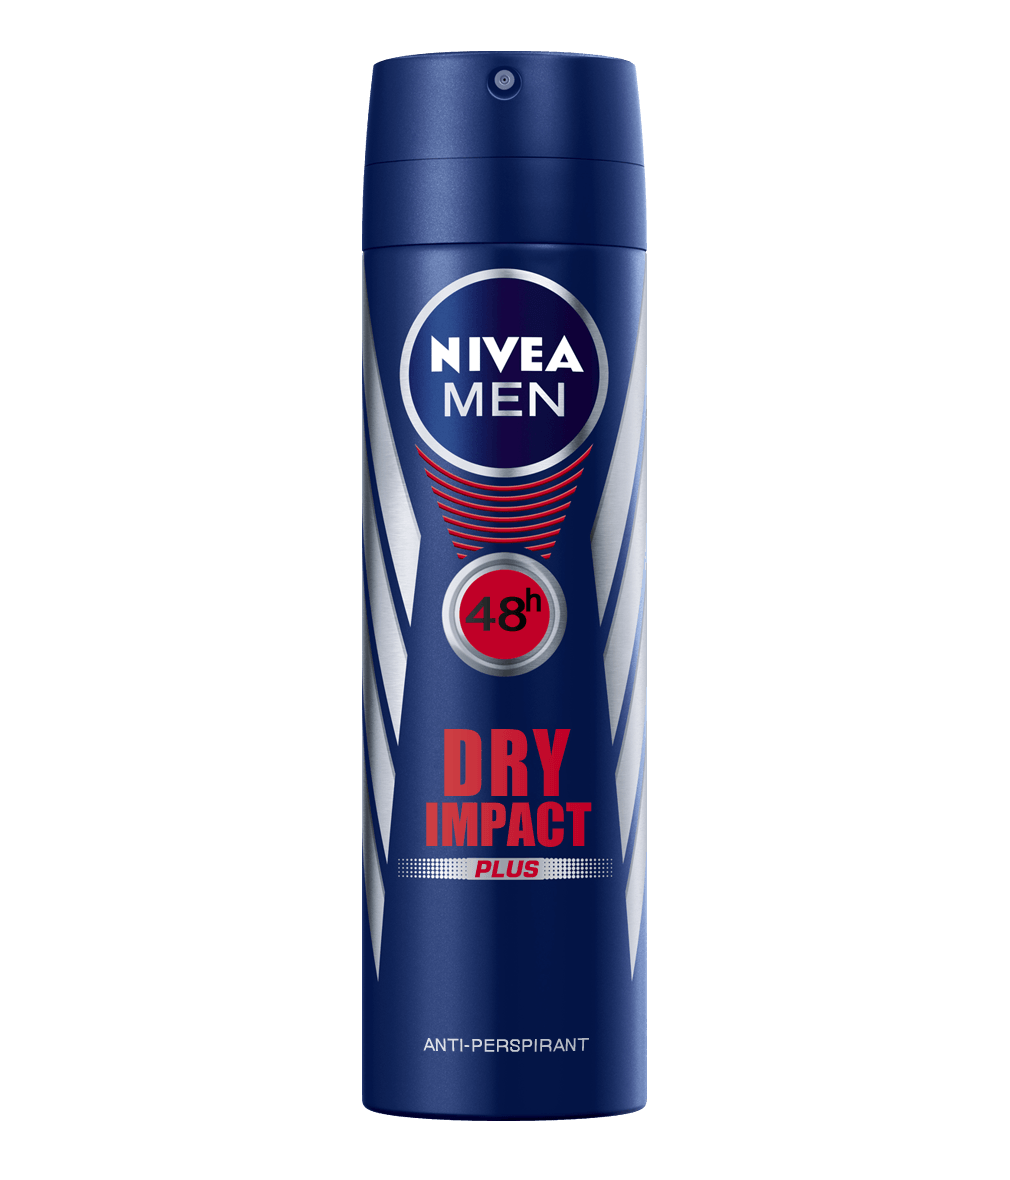 Nivea Men Dry Impact Deodorant - Brivane